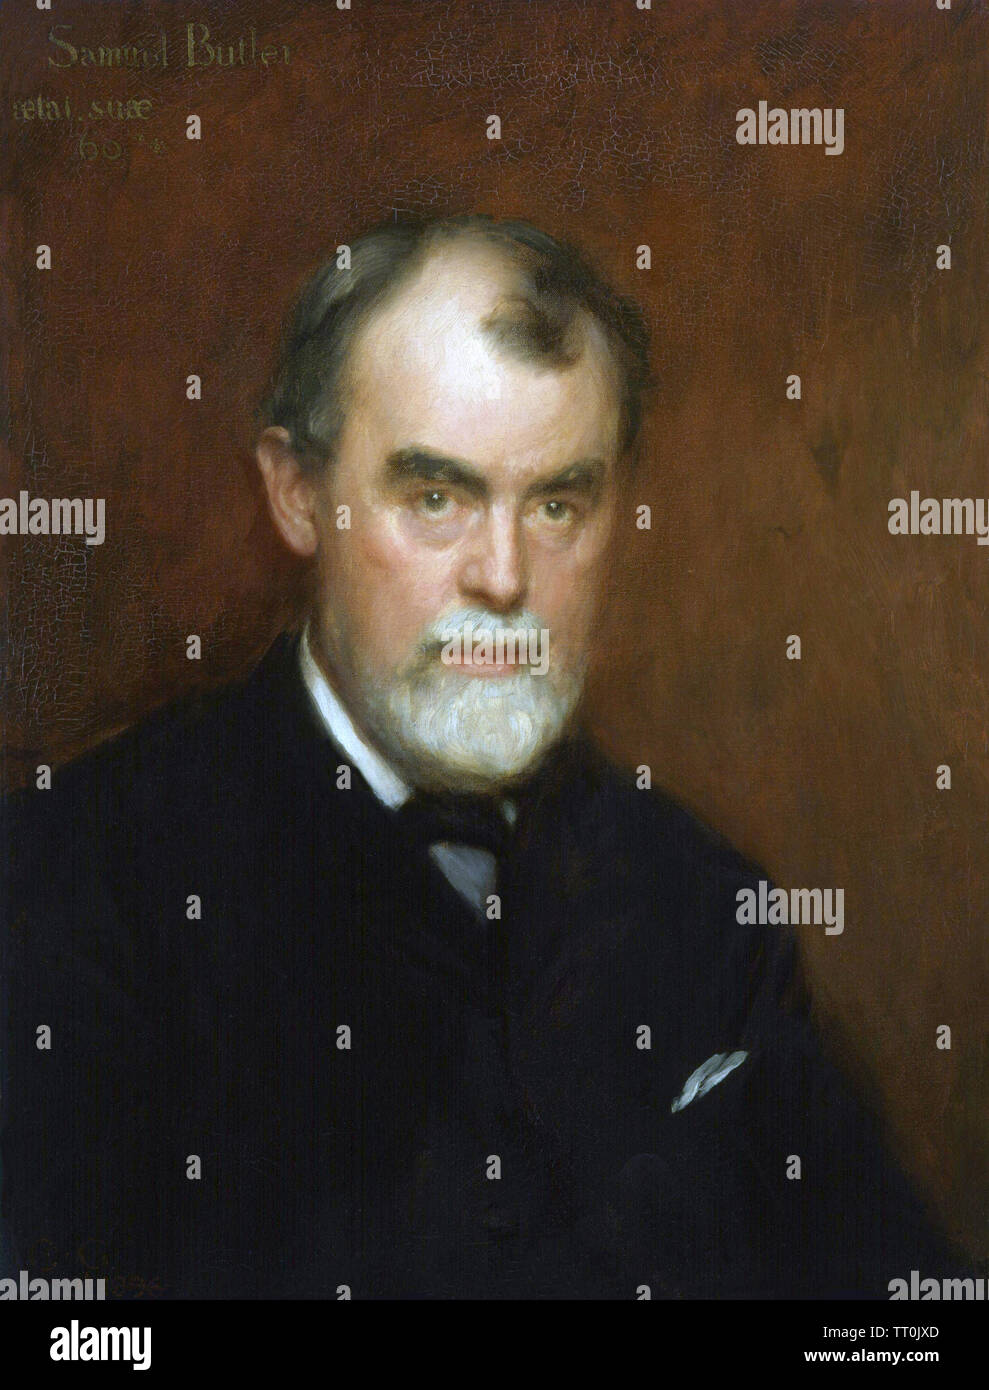 SAMUEL BUTLER (1835-1902) romanziere inglese Foto Stock